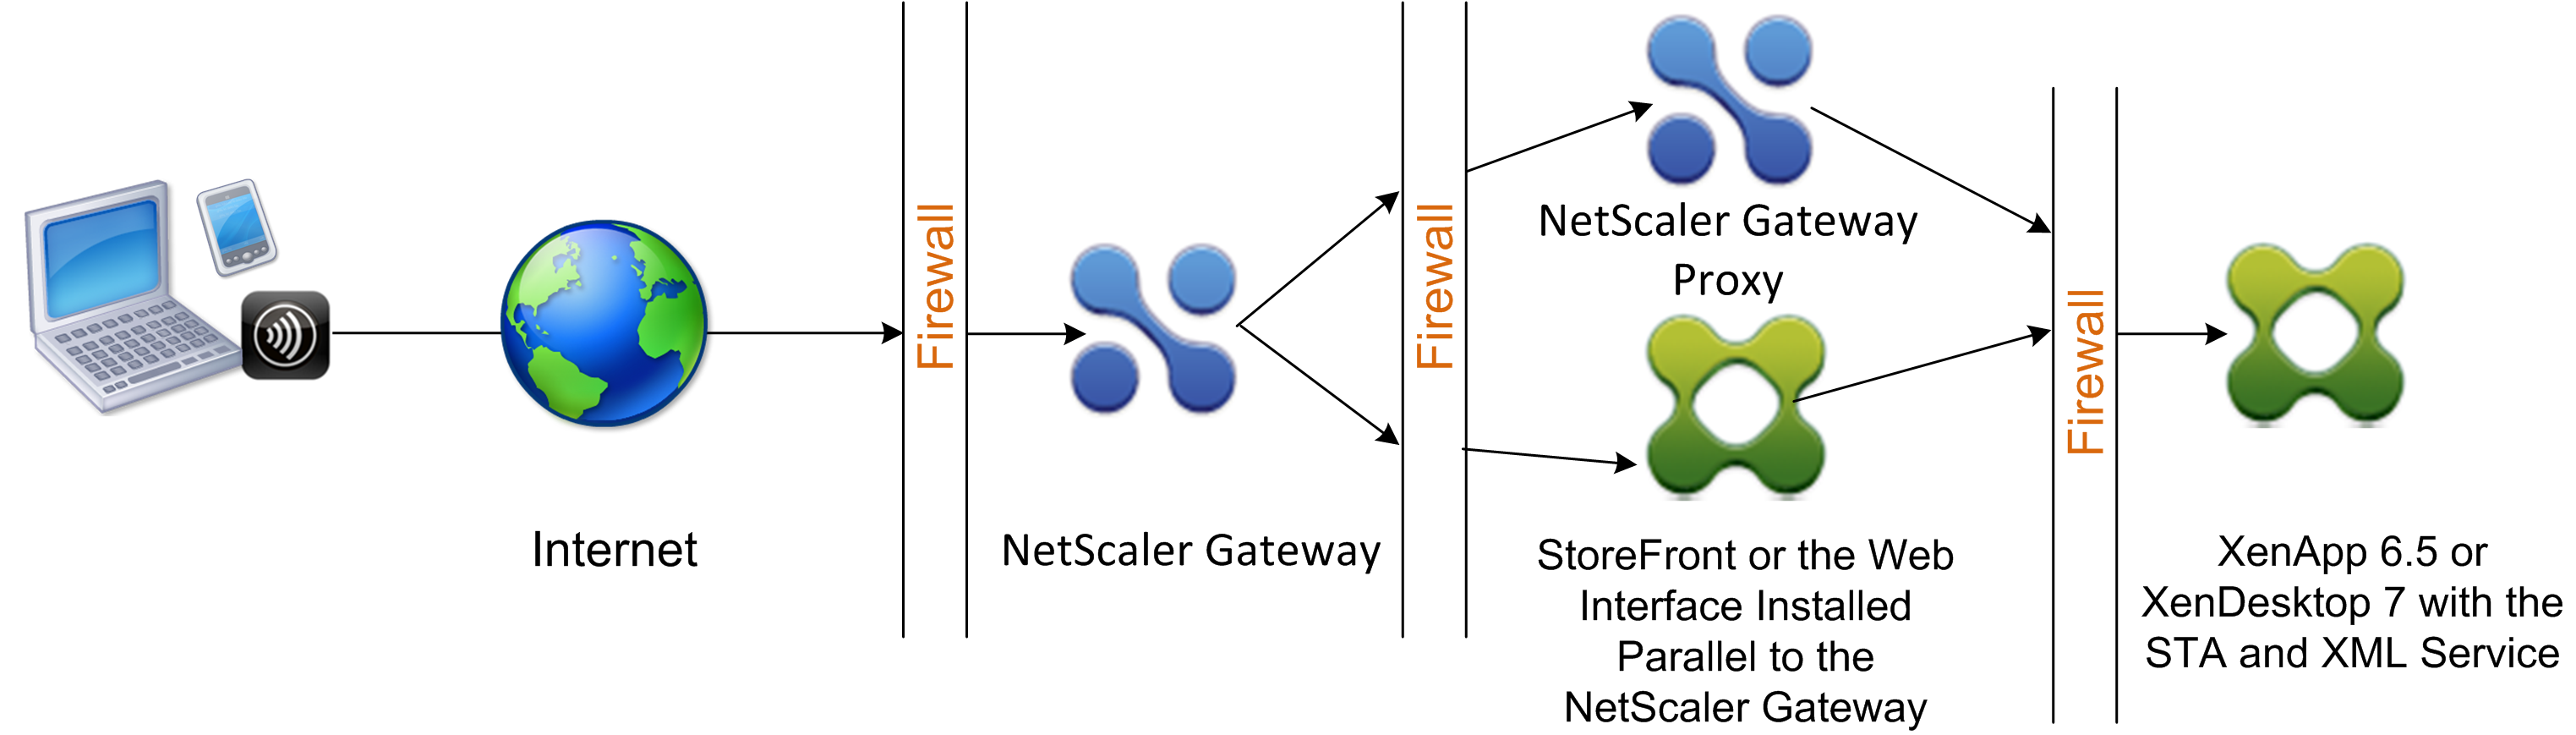 Deploying NetScaler Gateway in a Double-Hop DMZ